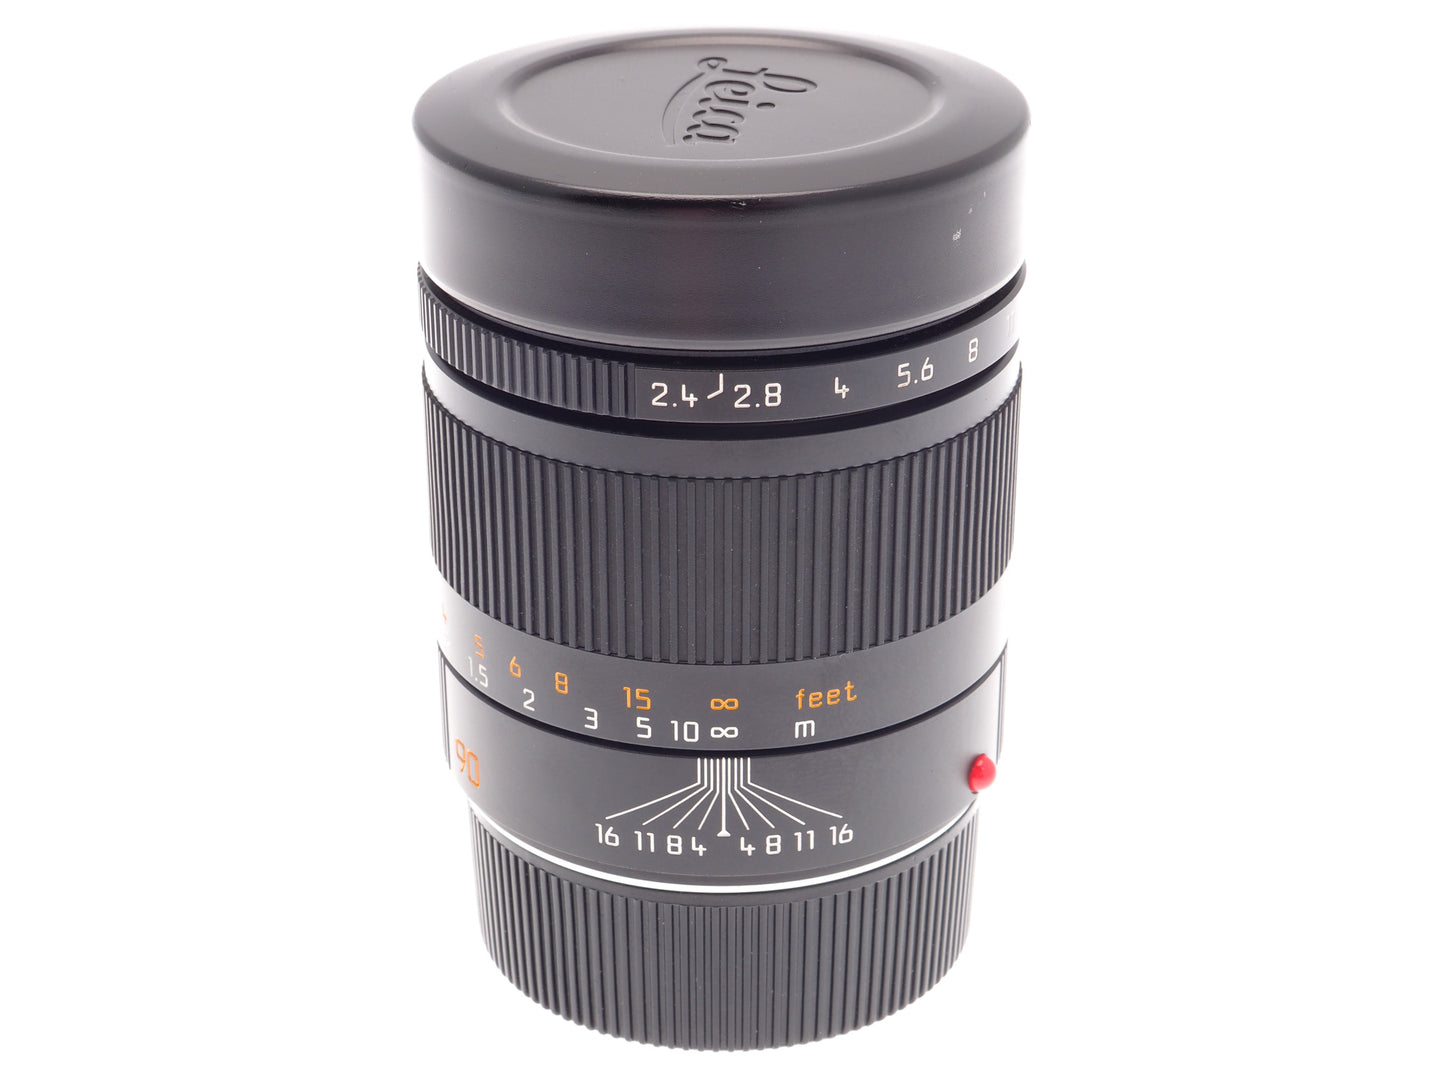 Leica 90mm f2.4 Summarit-M - Lens